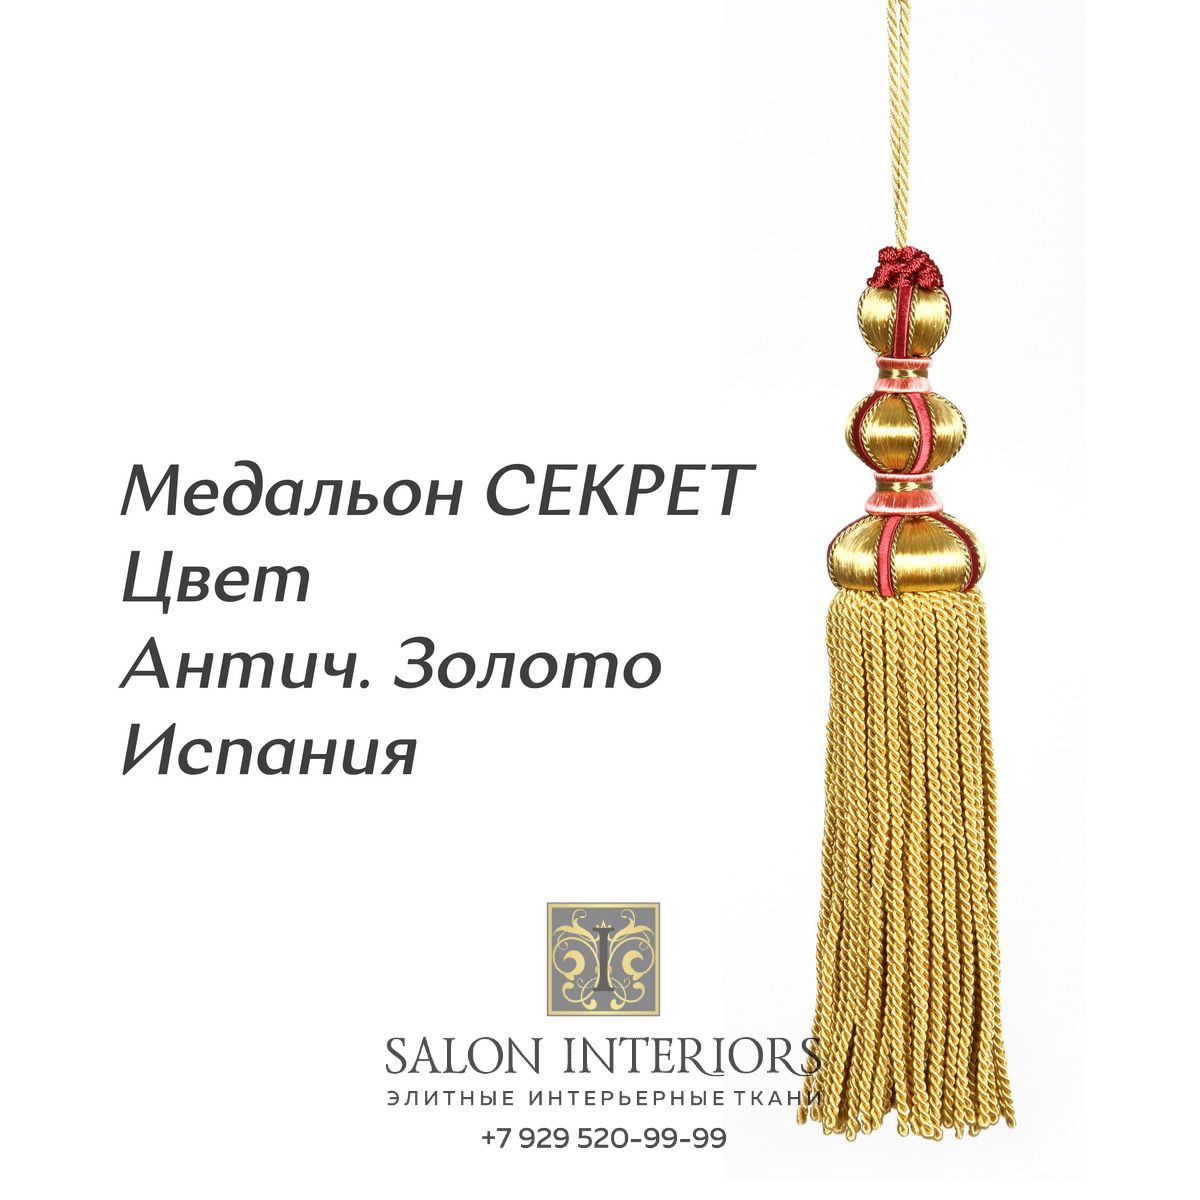 Медальон "СЕКРЕТ" Арт MK996A-12533 Цвет Антич.золото разм.27см Испания